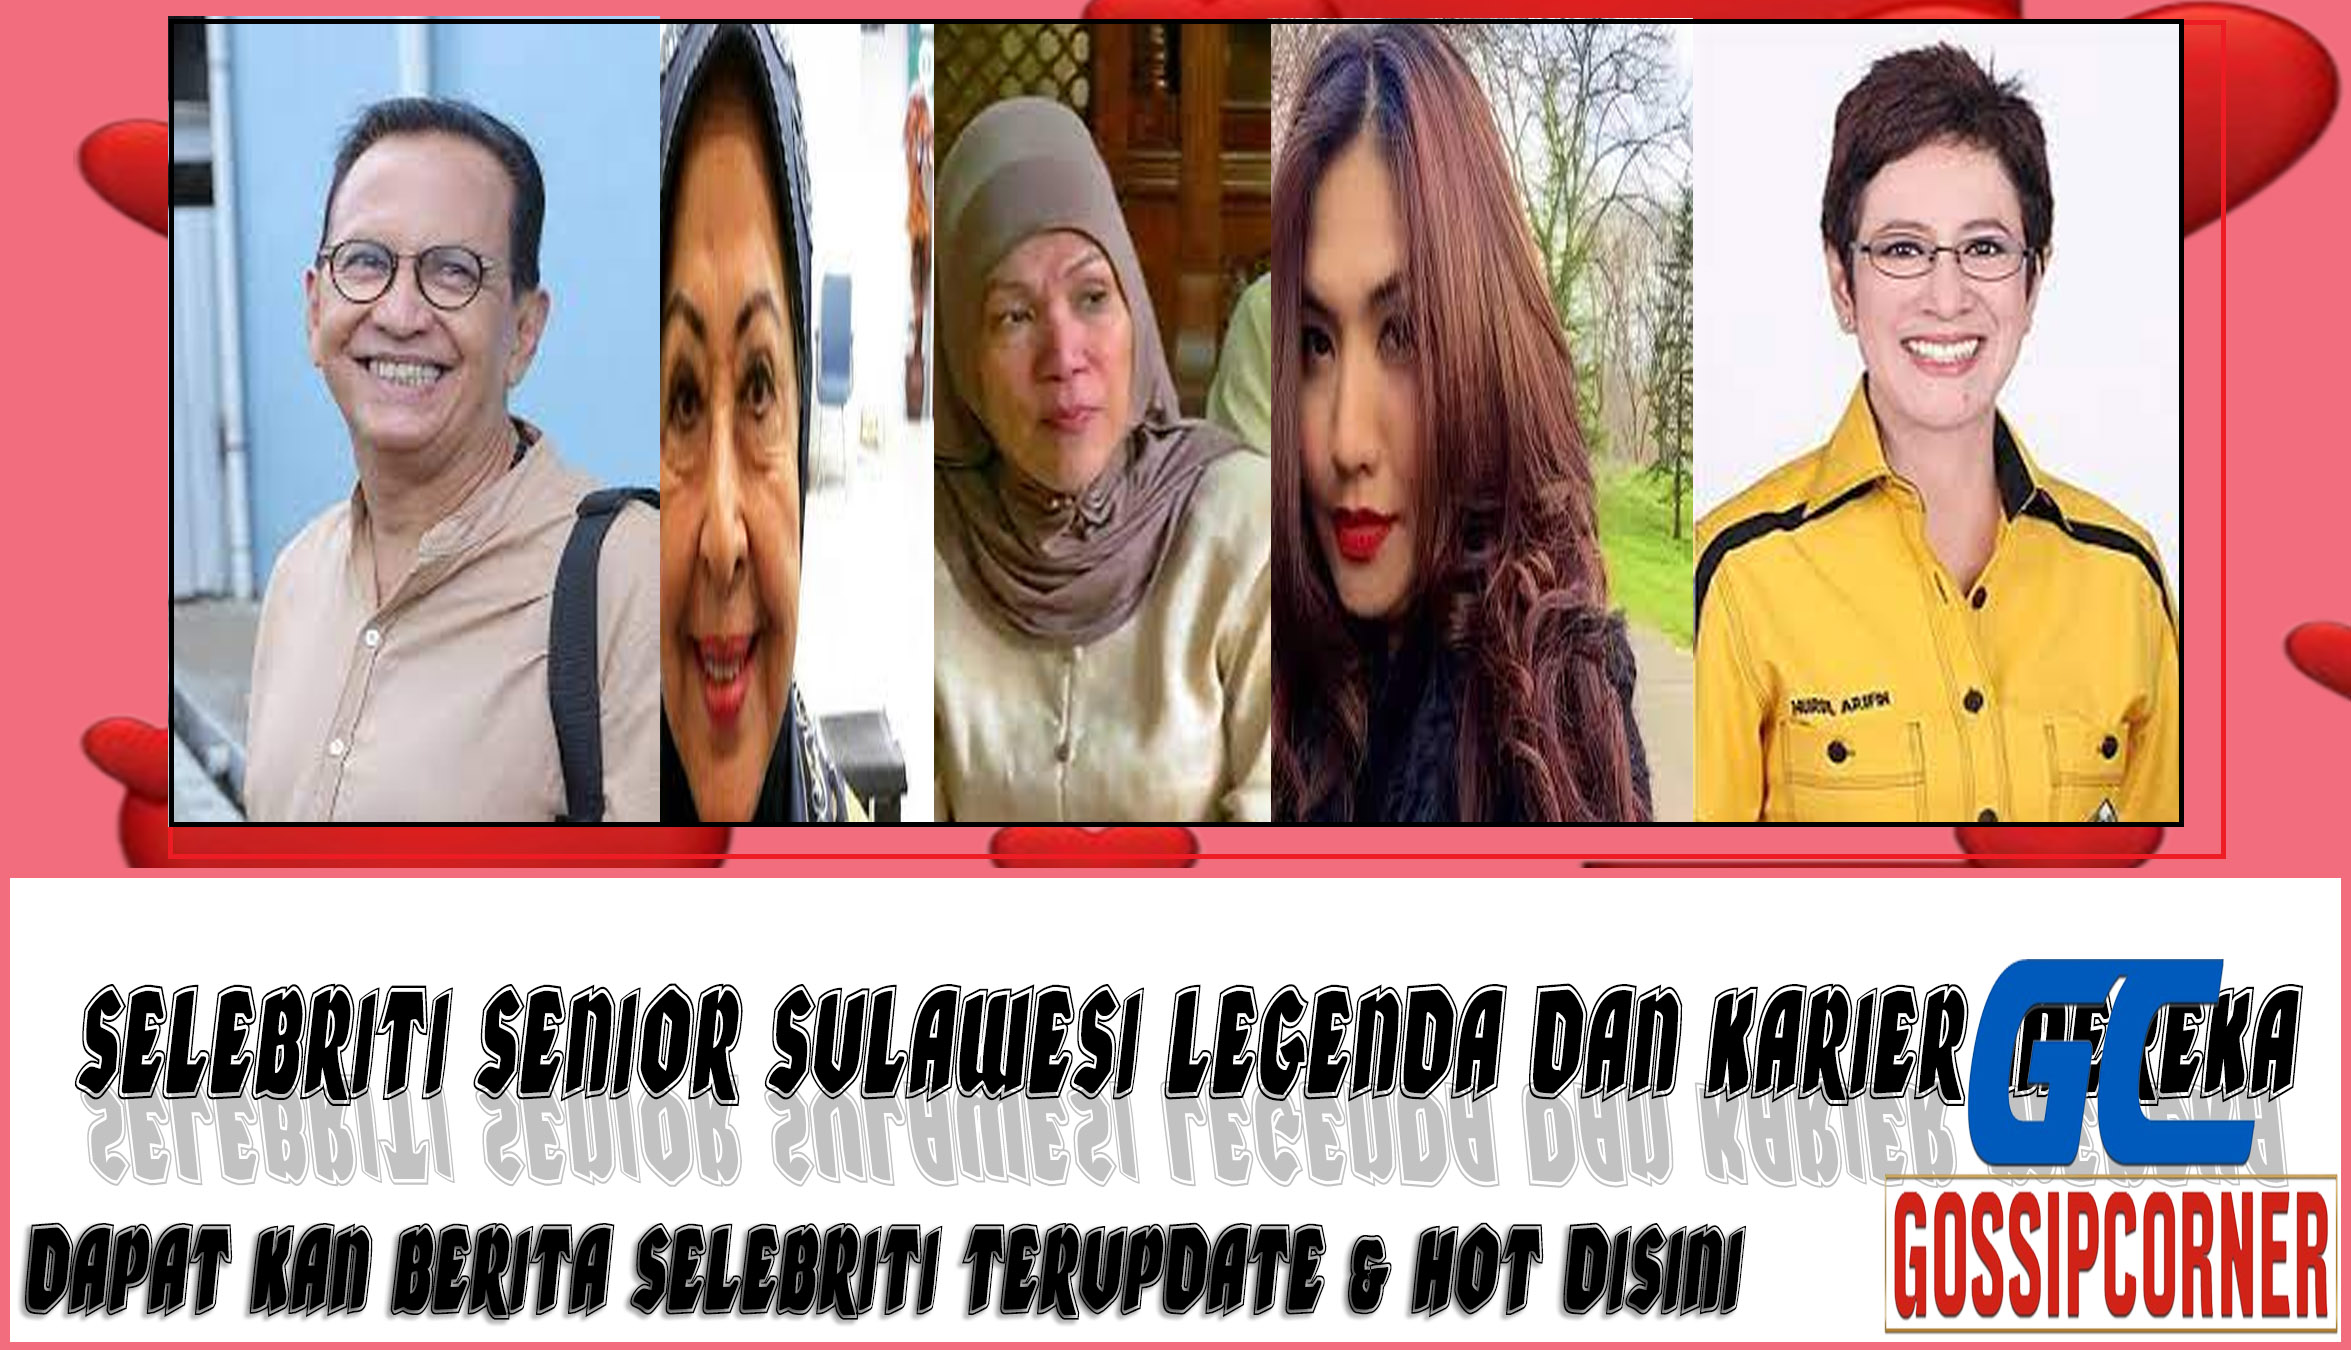 5 Selebriti Senior Sulawesi